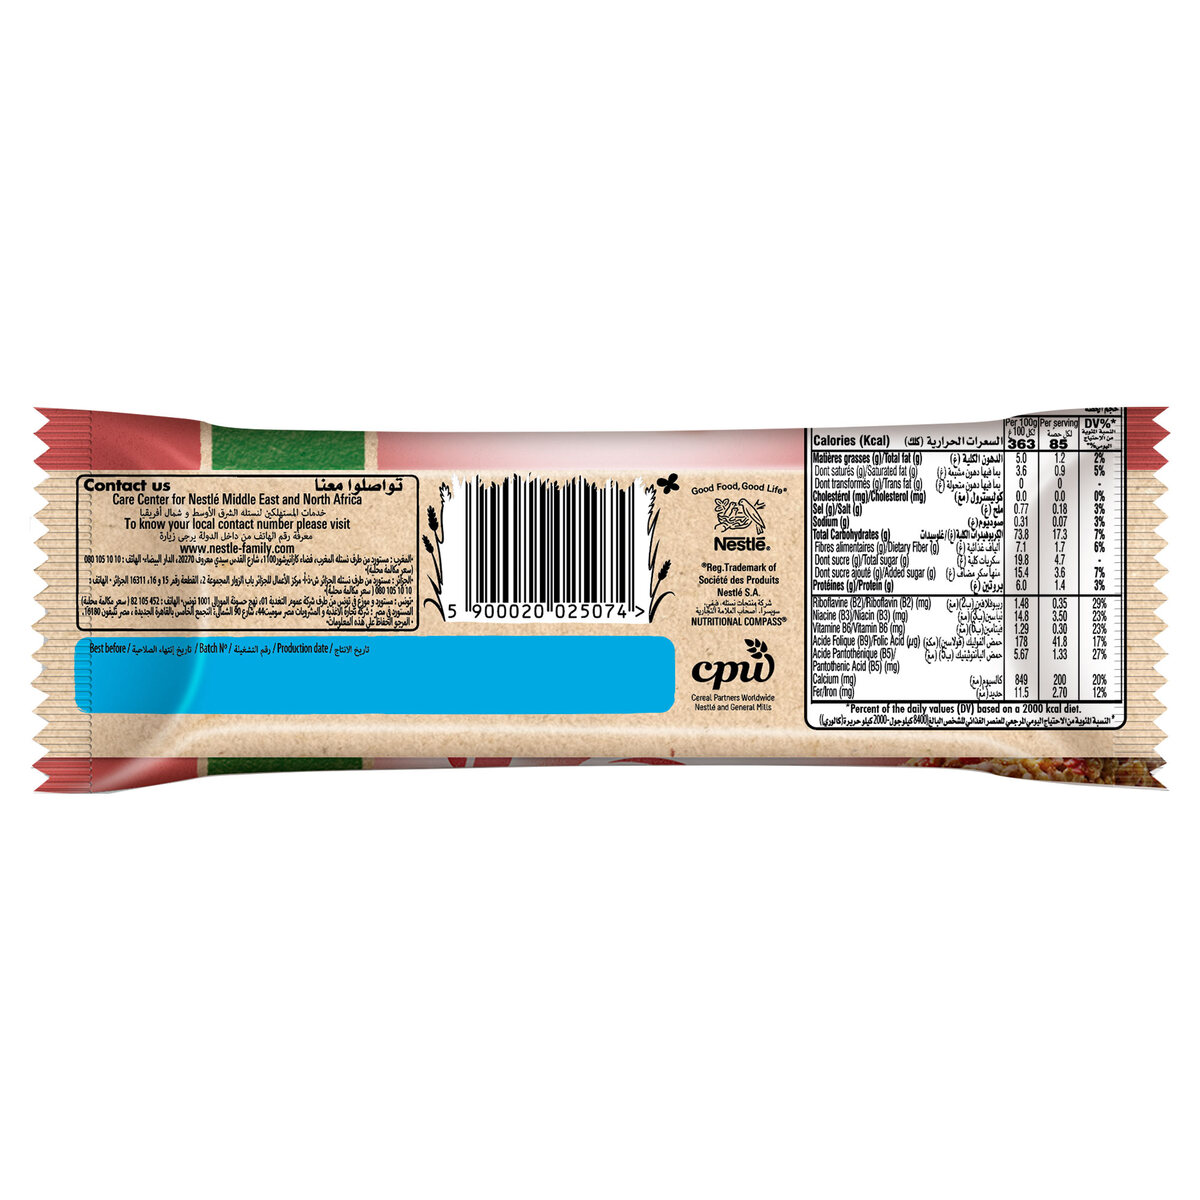 Nestle Fitness Strawberry Cereal Bar 23.5 g